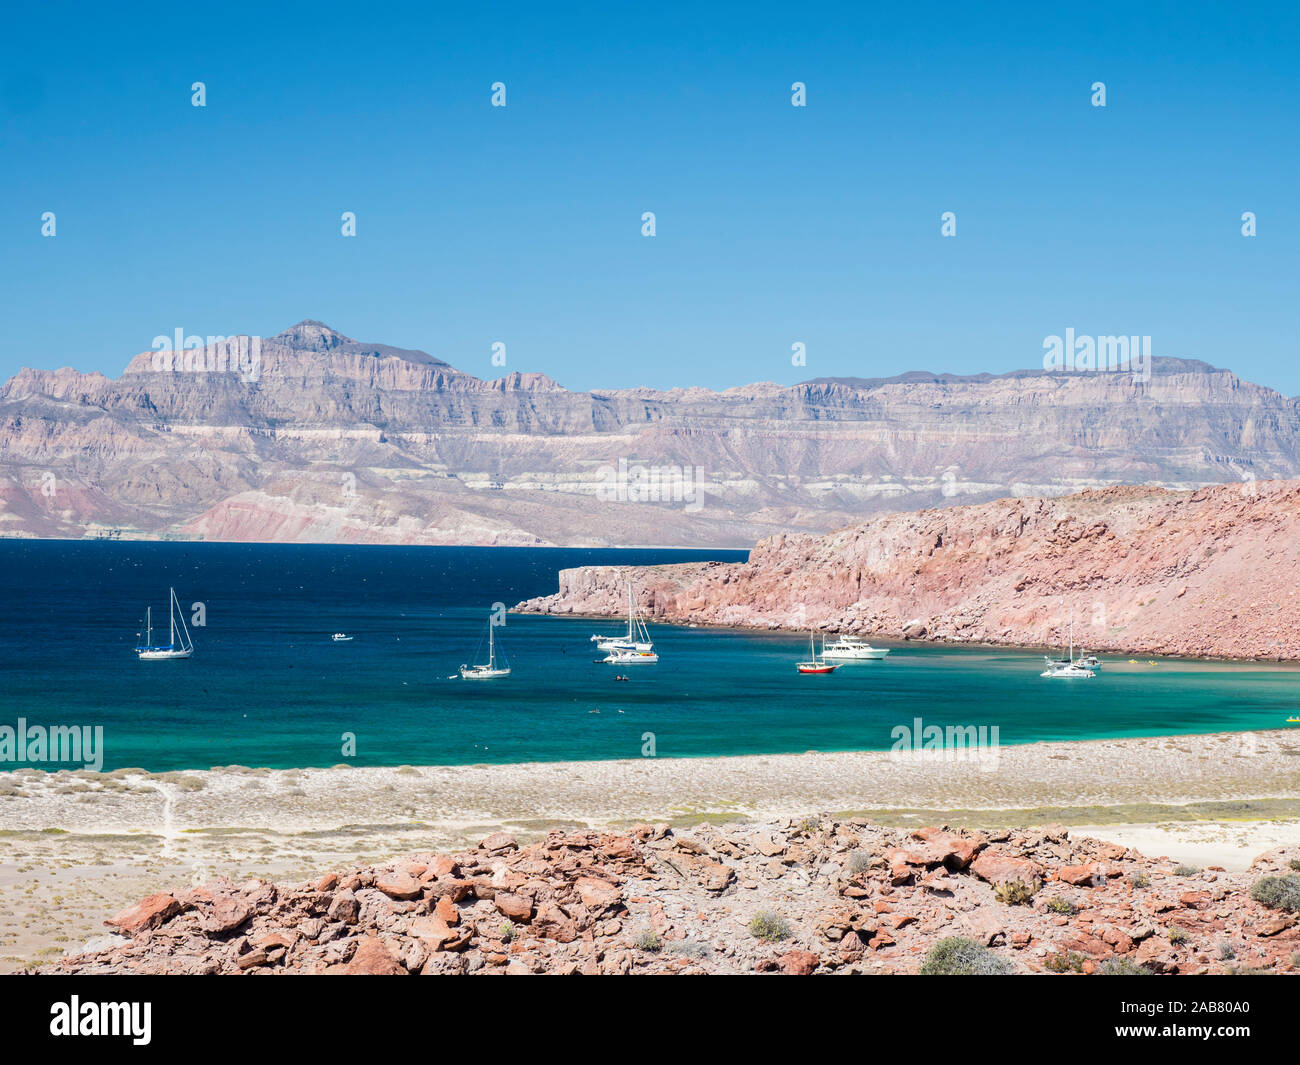 The protected natural harbor at Isla San Francisco, Baja California Sur, Mexico, North America Stock Photo